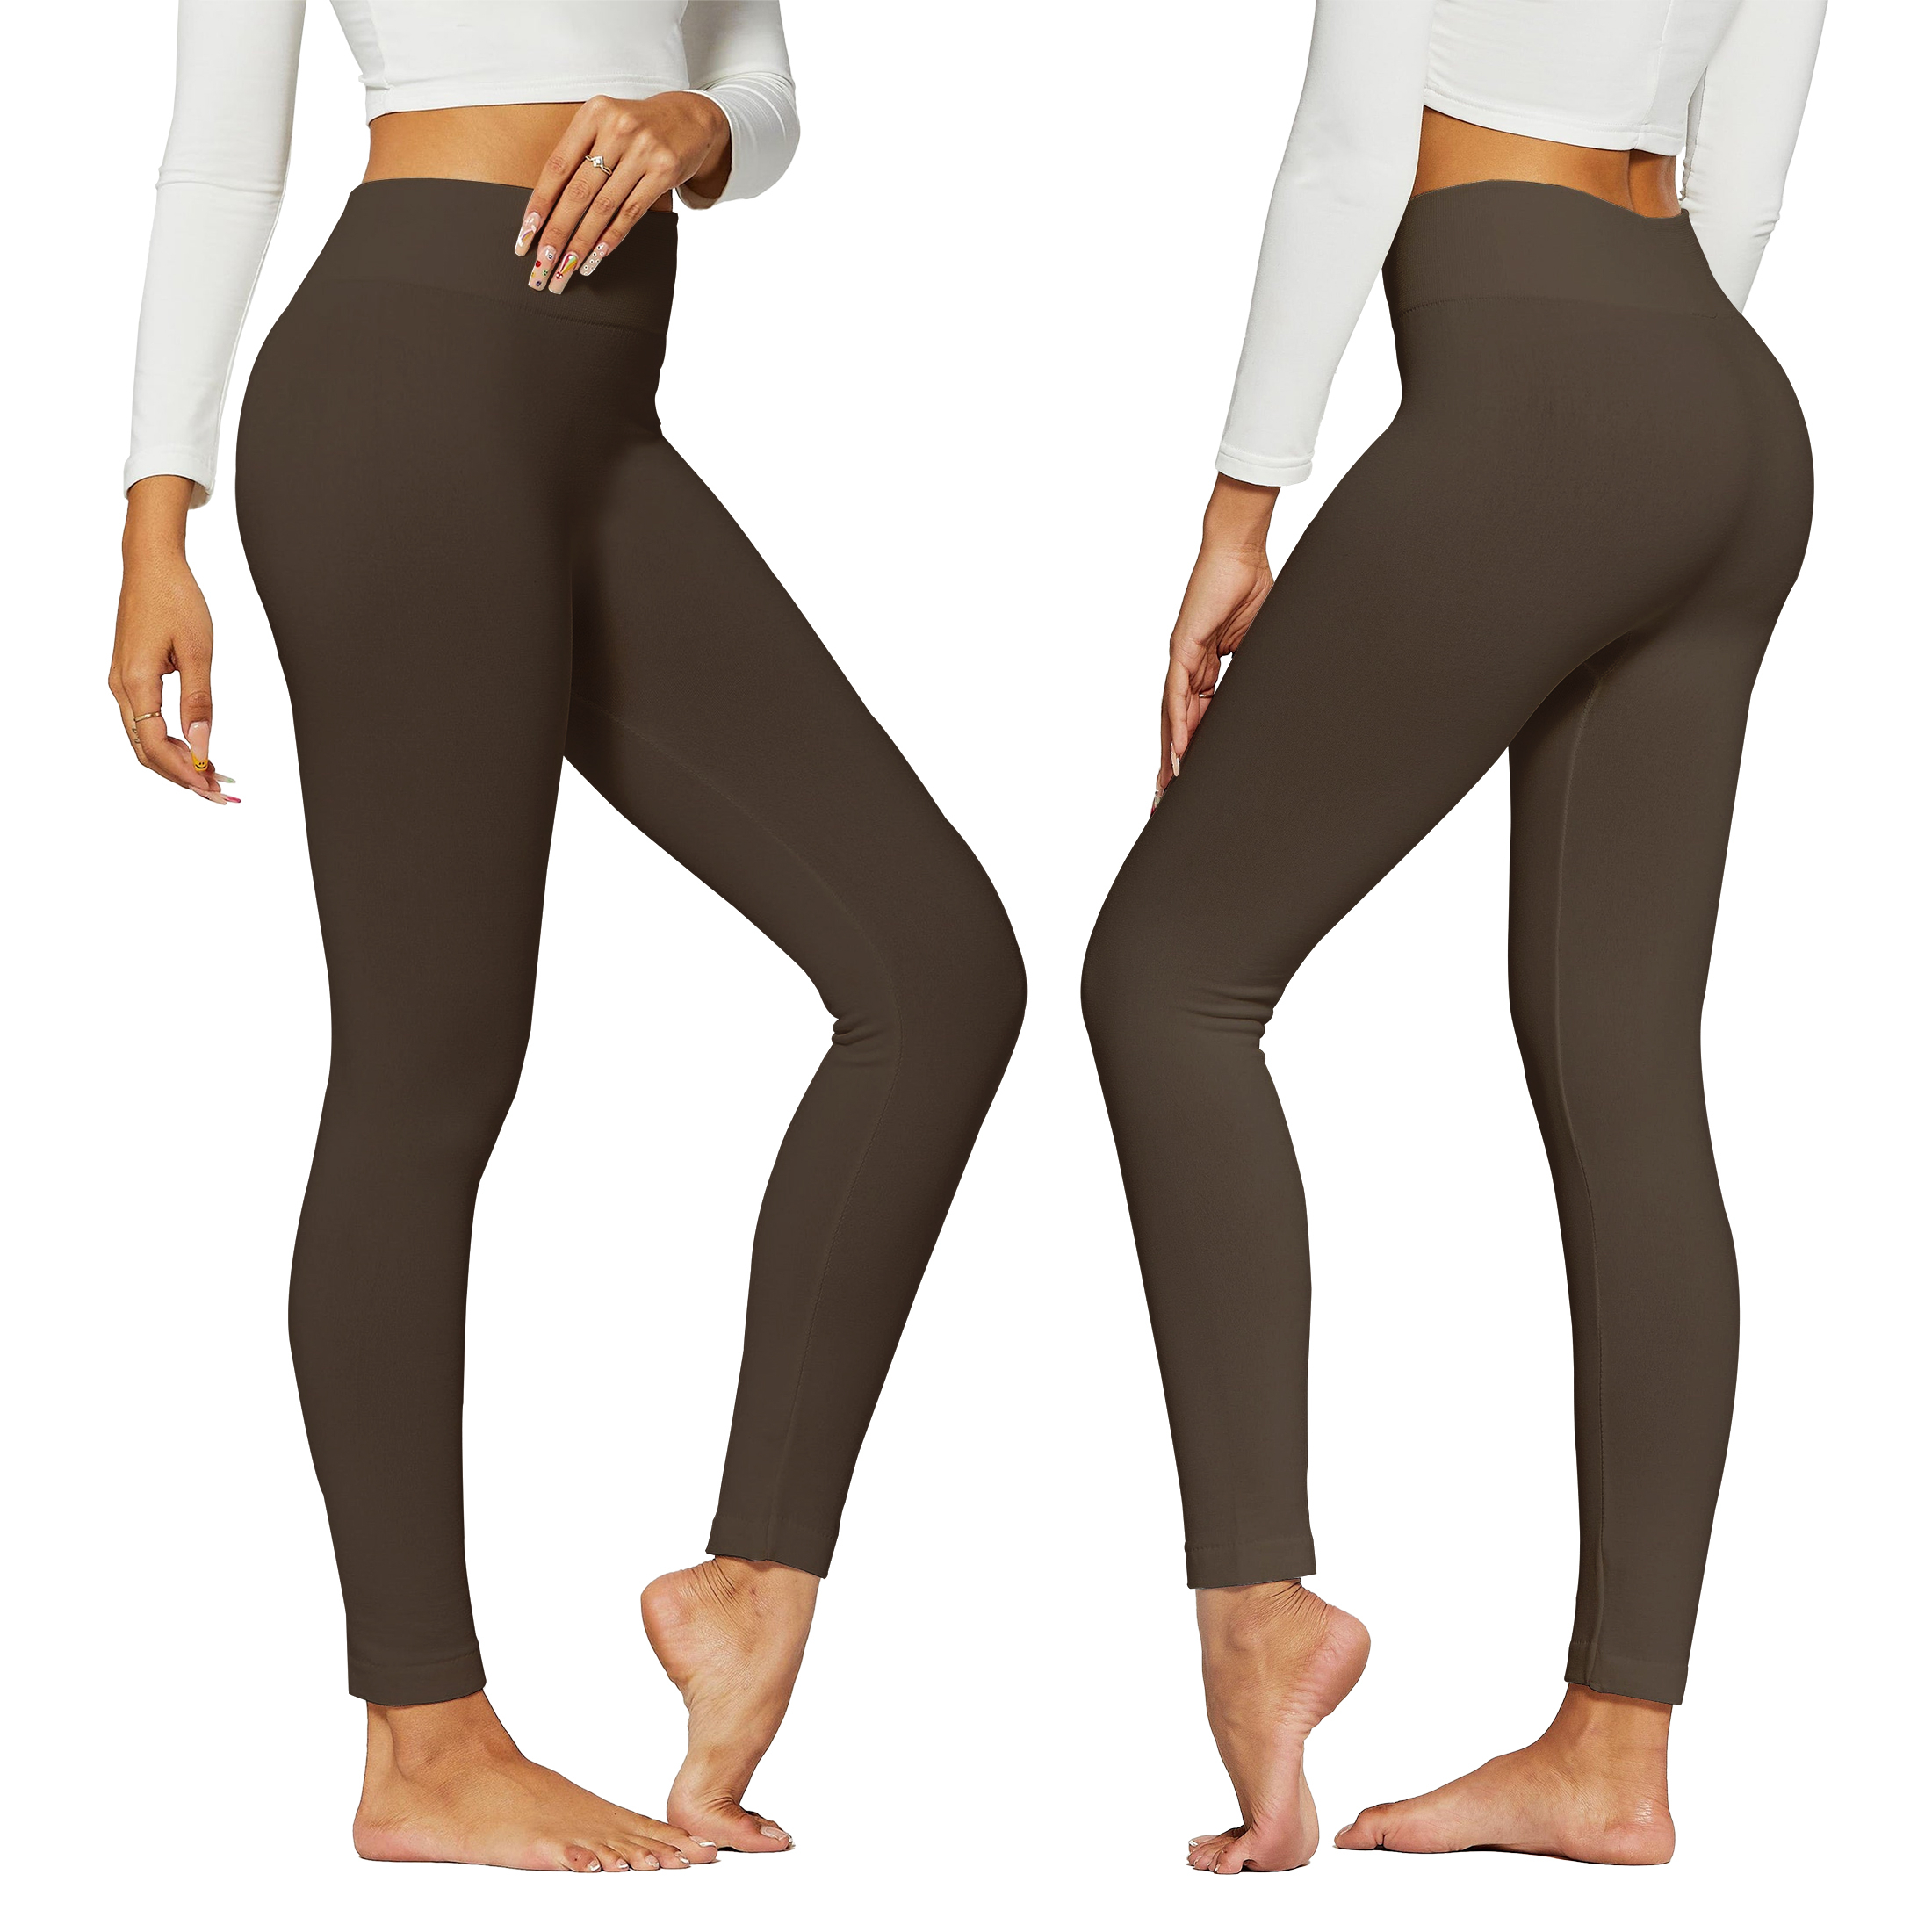 Women's Premium Quality High-Waist Fleece Lined Leggings (S-4X) - Brown, 3X/4X